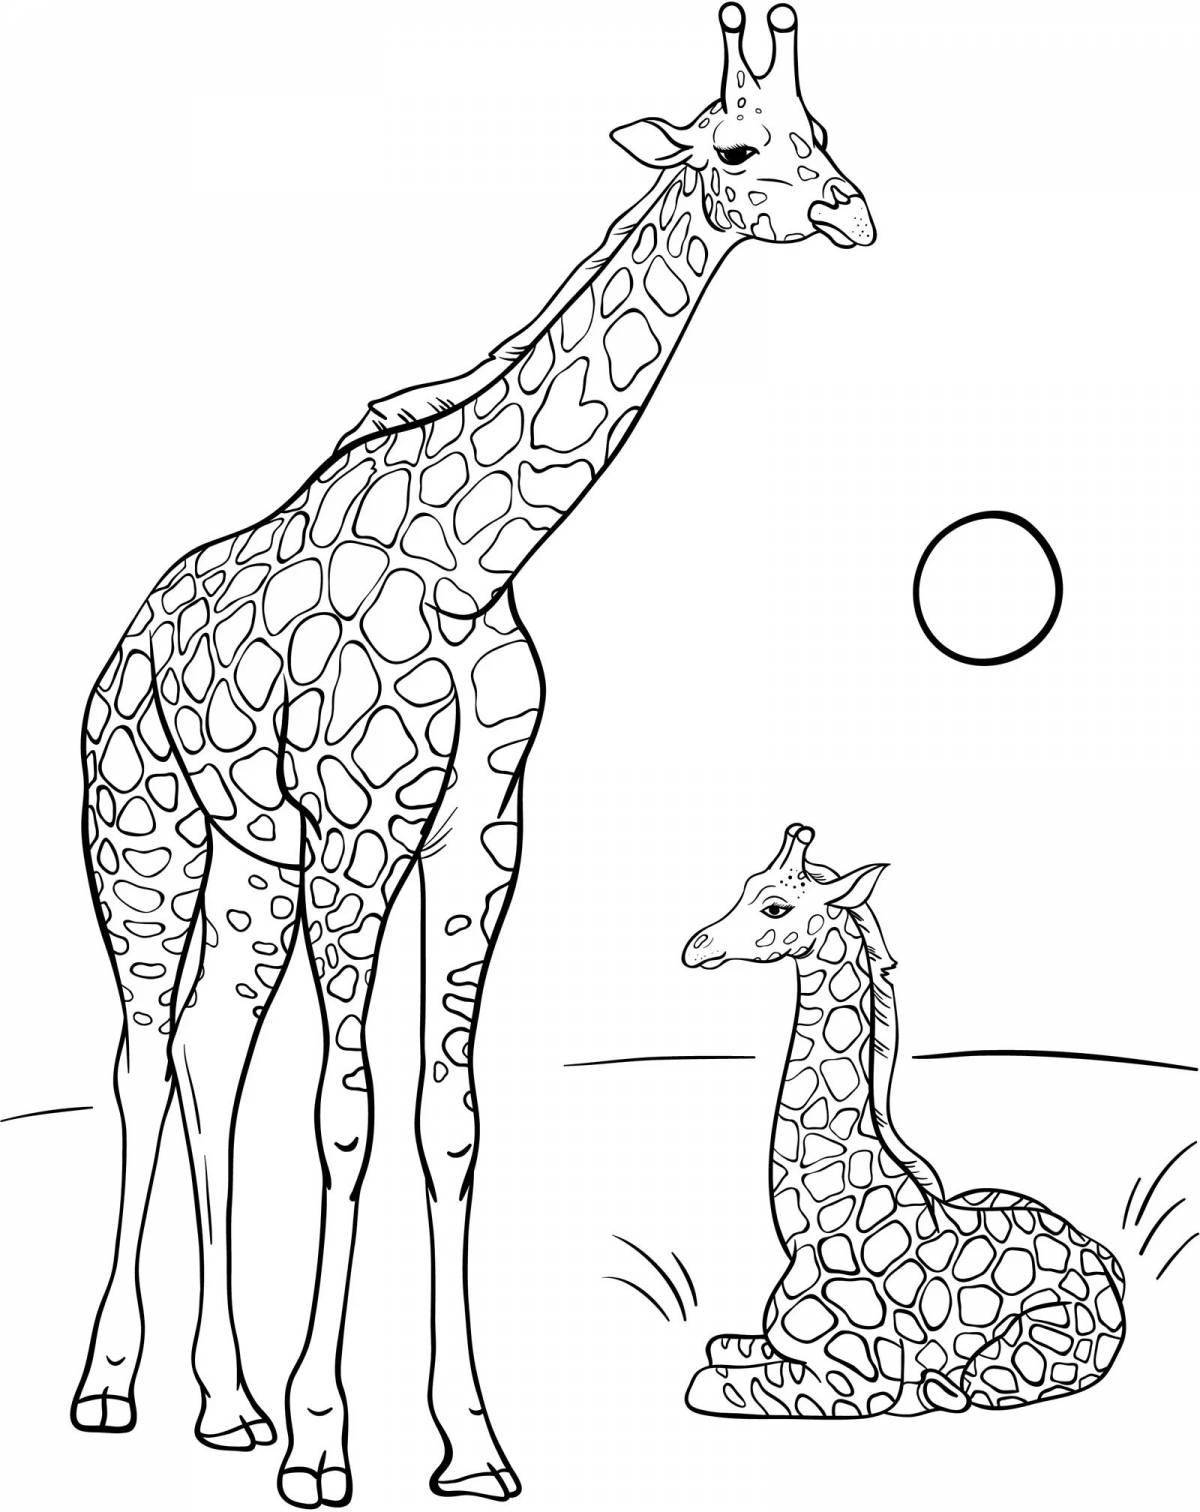 Courtesy drawing of a giraffe